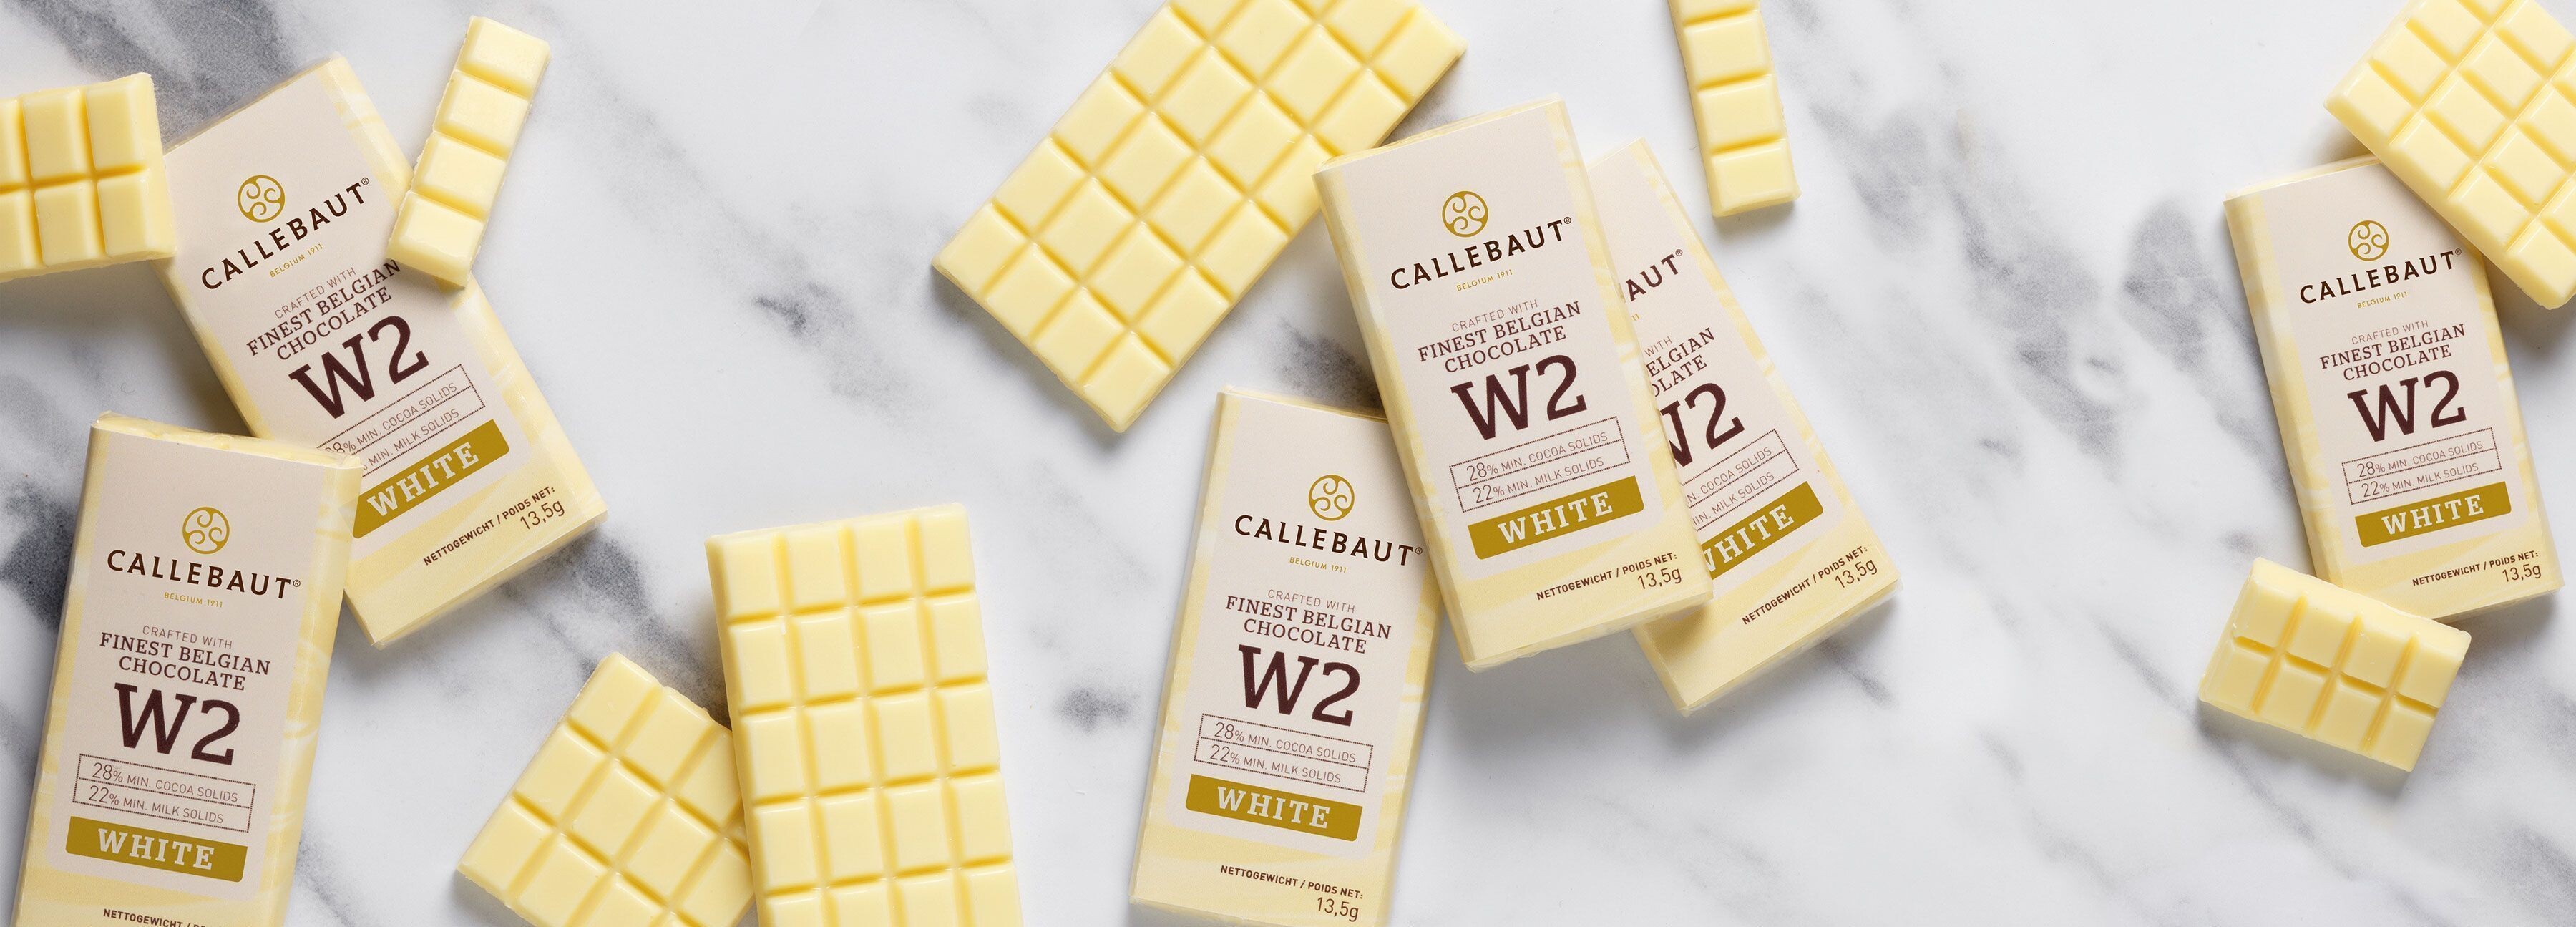 Callebaut Napolitains Chocolate W2 White 75pcs Wrapped Individually